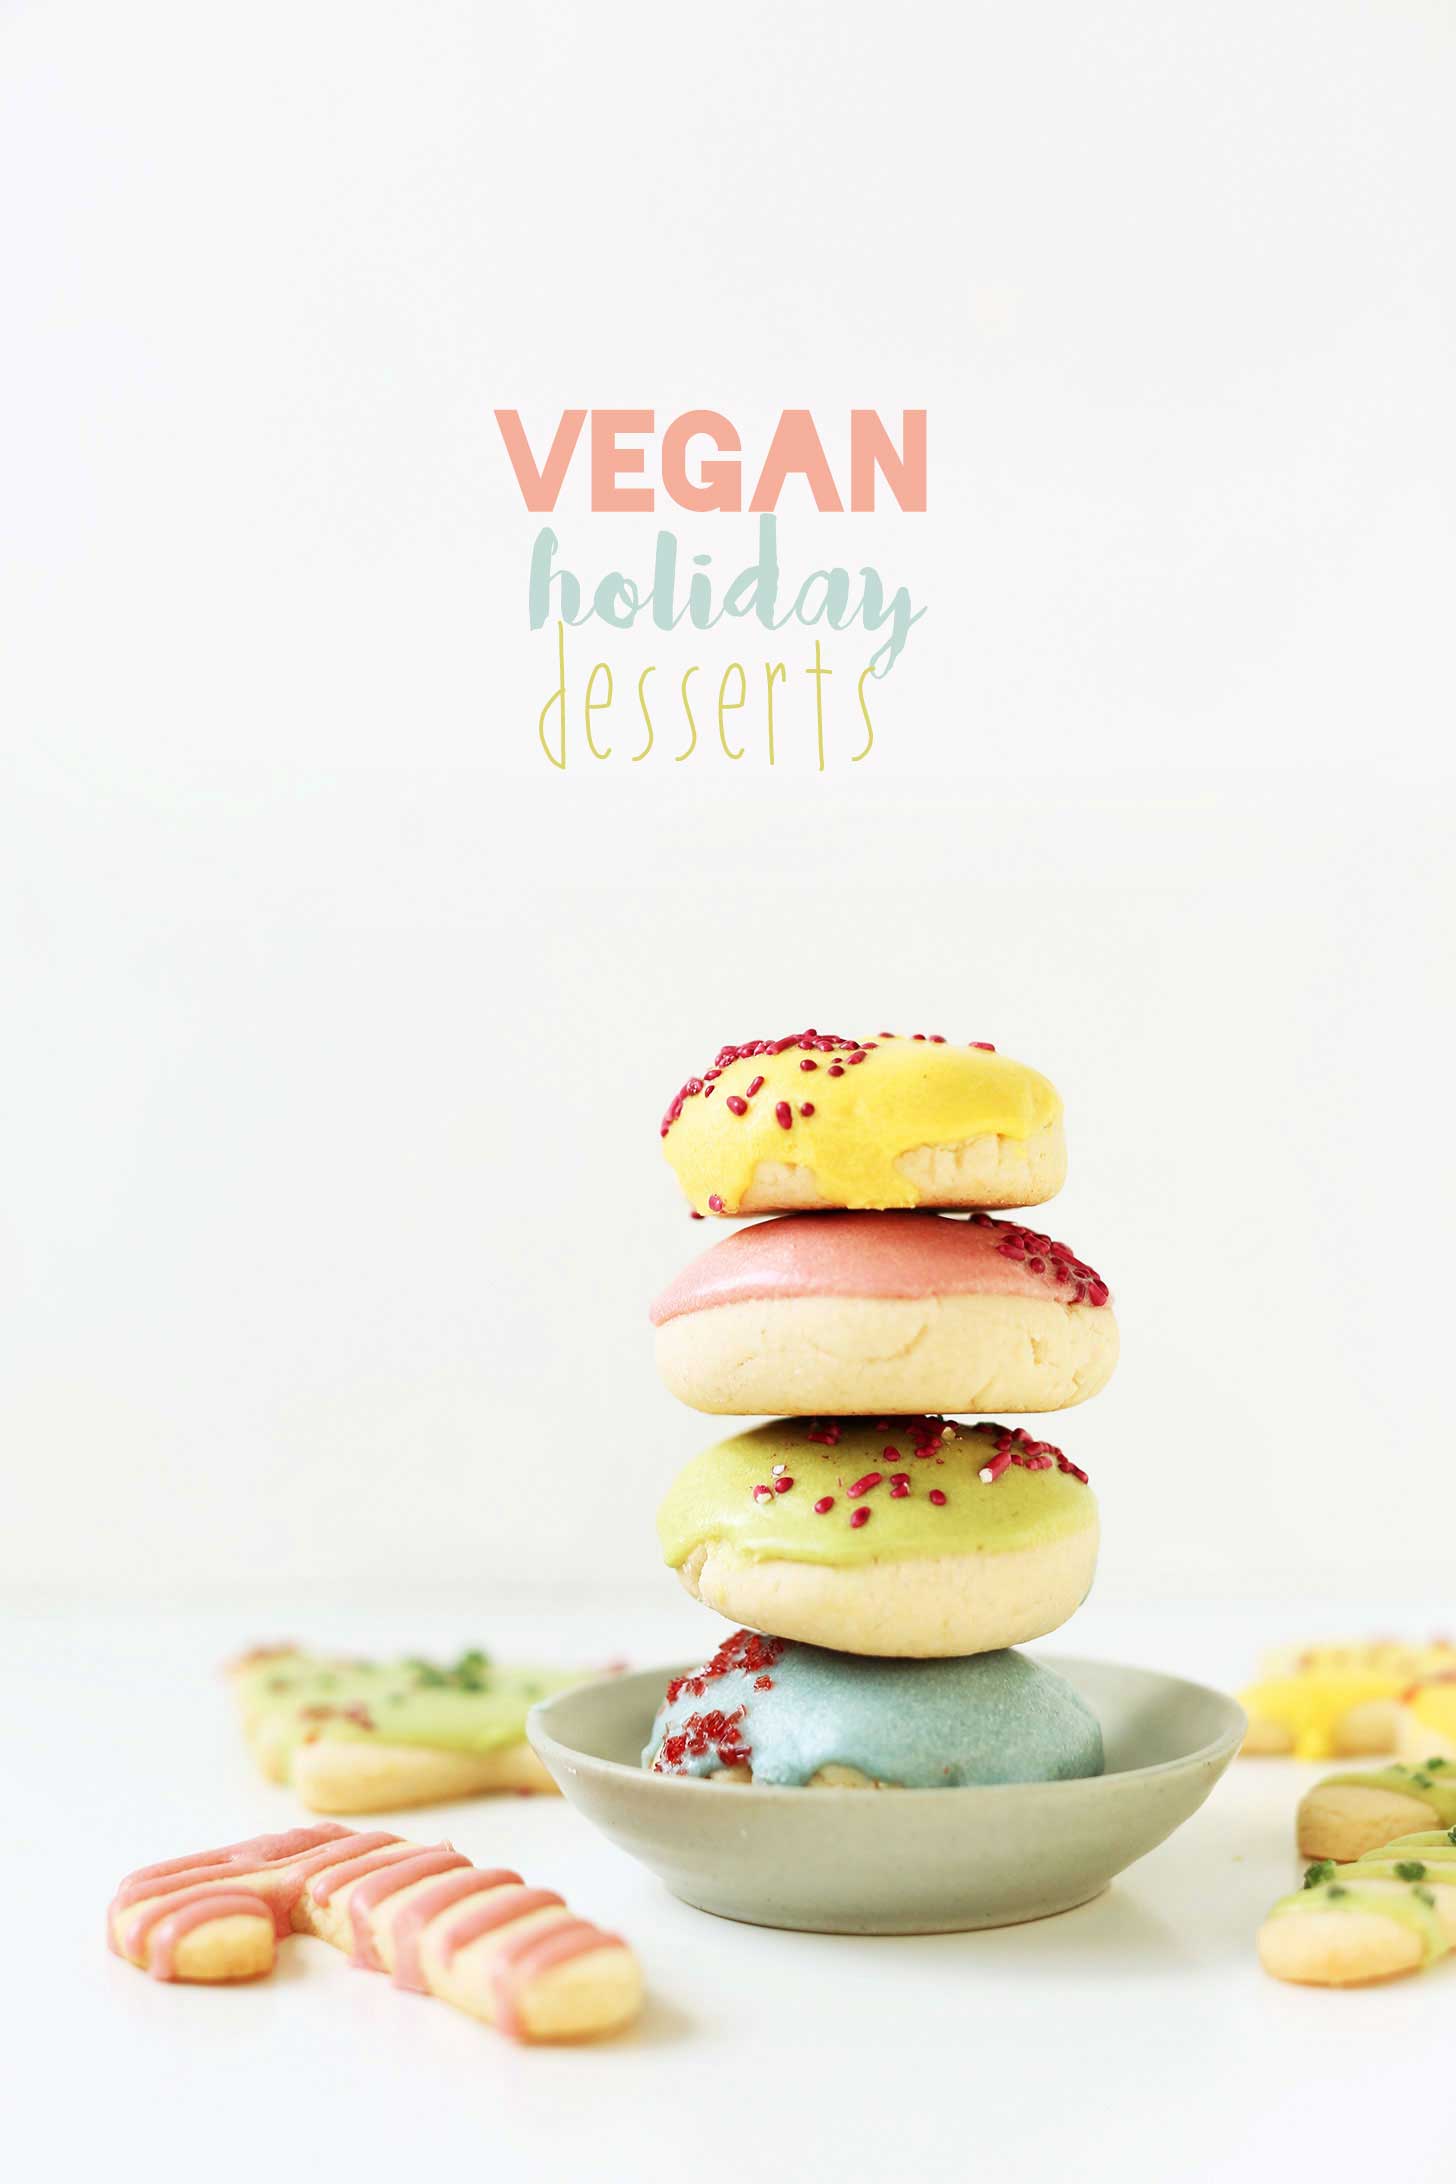 Easy holiday vegan dessert ideas